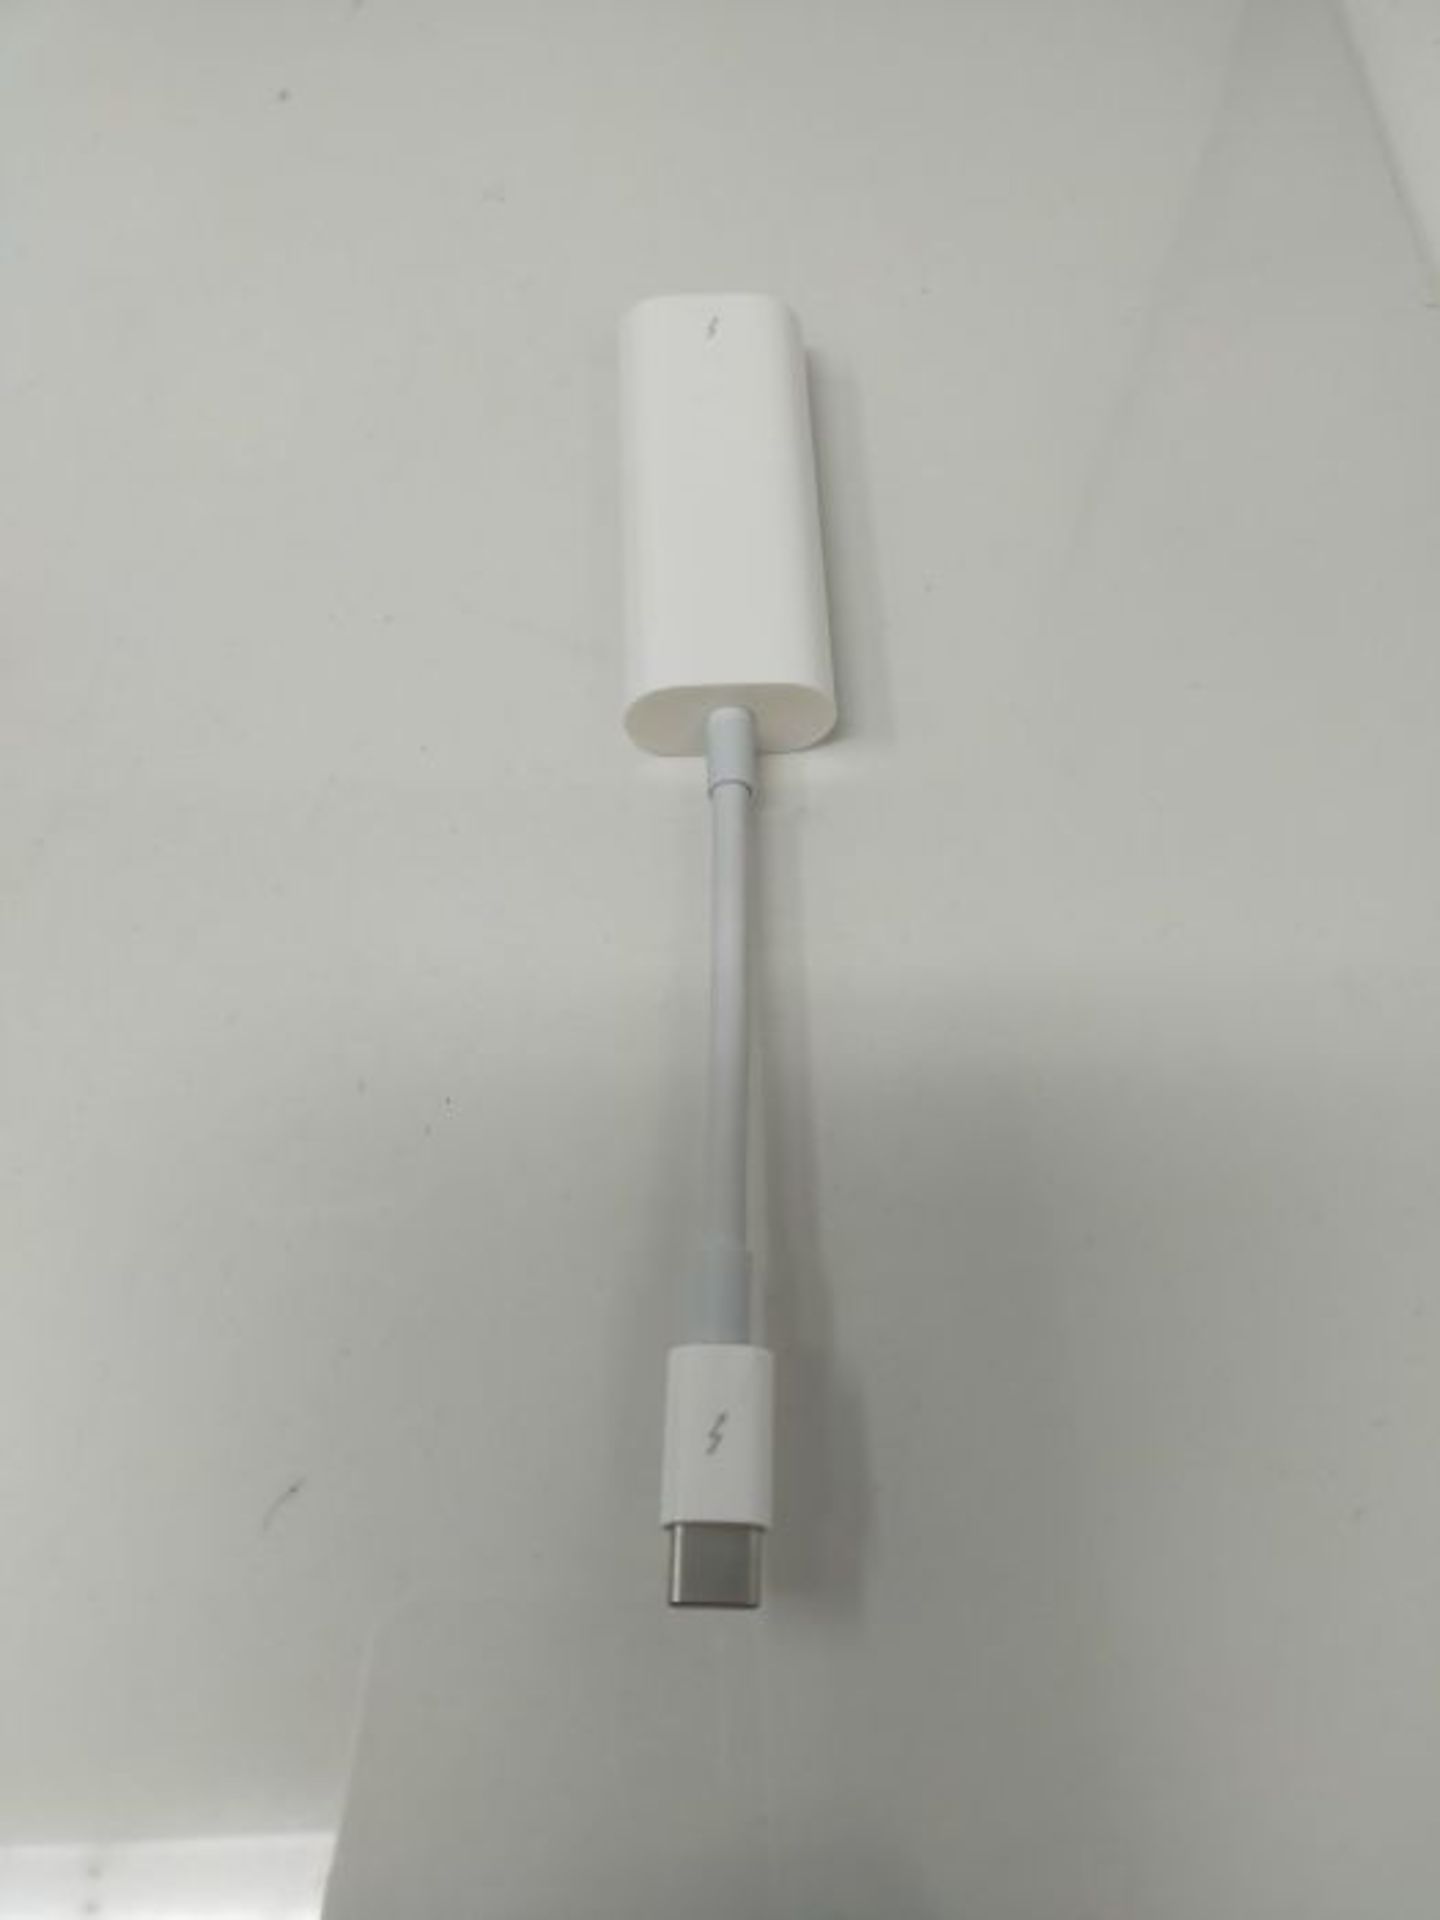 RRP £72.00 Apple Thunderbolt 3 (USB-C) to Thunderbolt 2 Adapter - Image 3 of 3